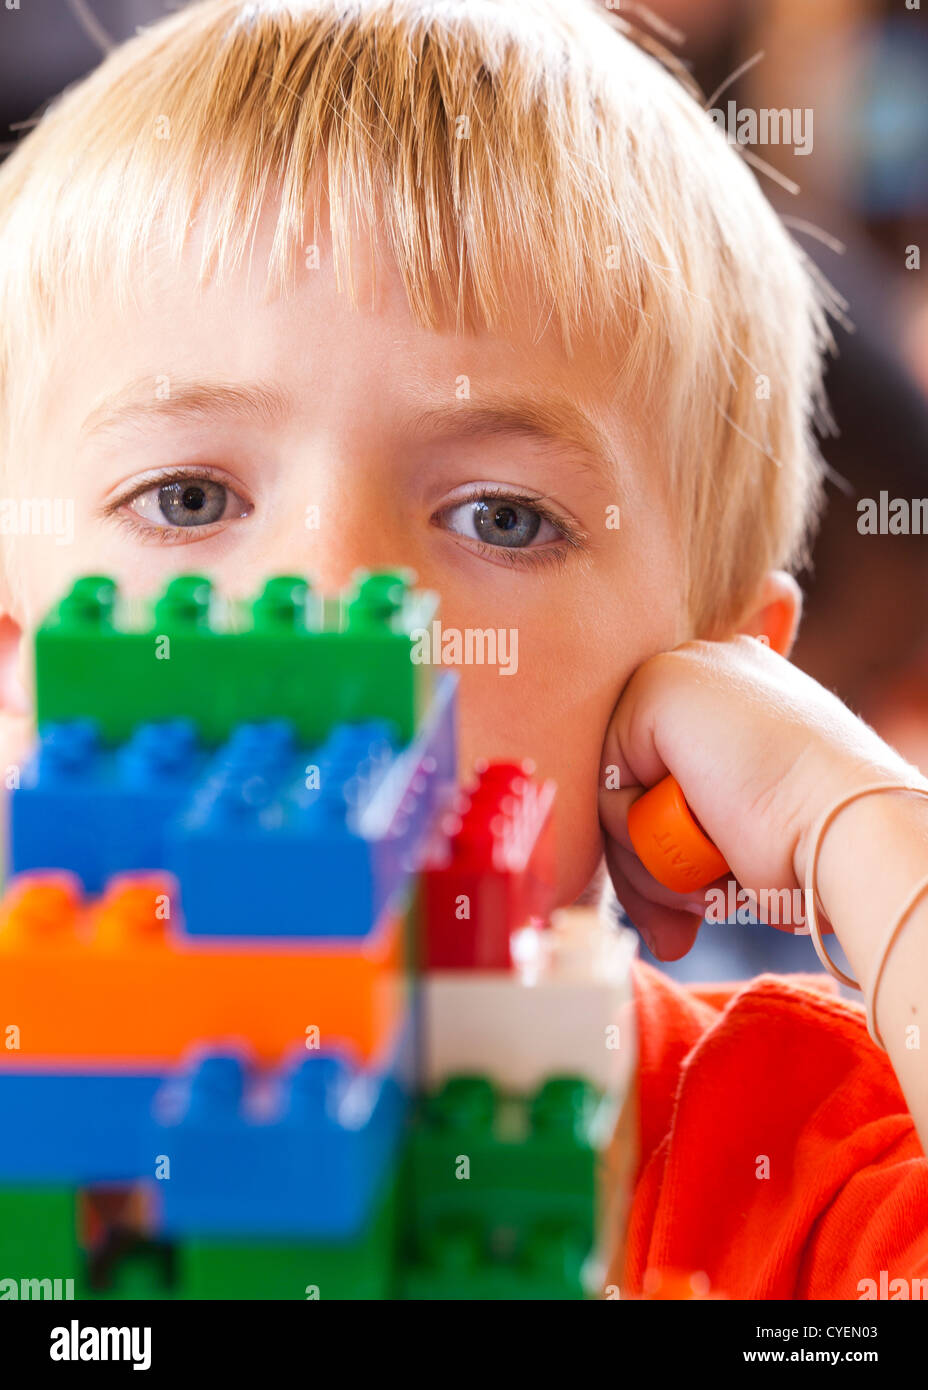 Caucasian boy with Lego bricks Stock Photo